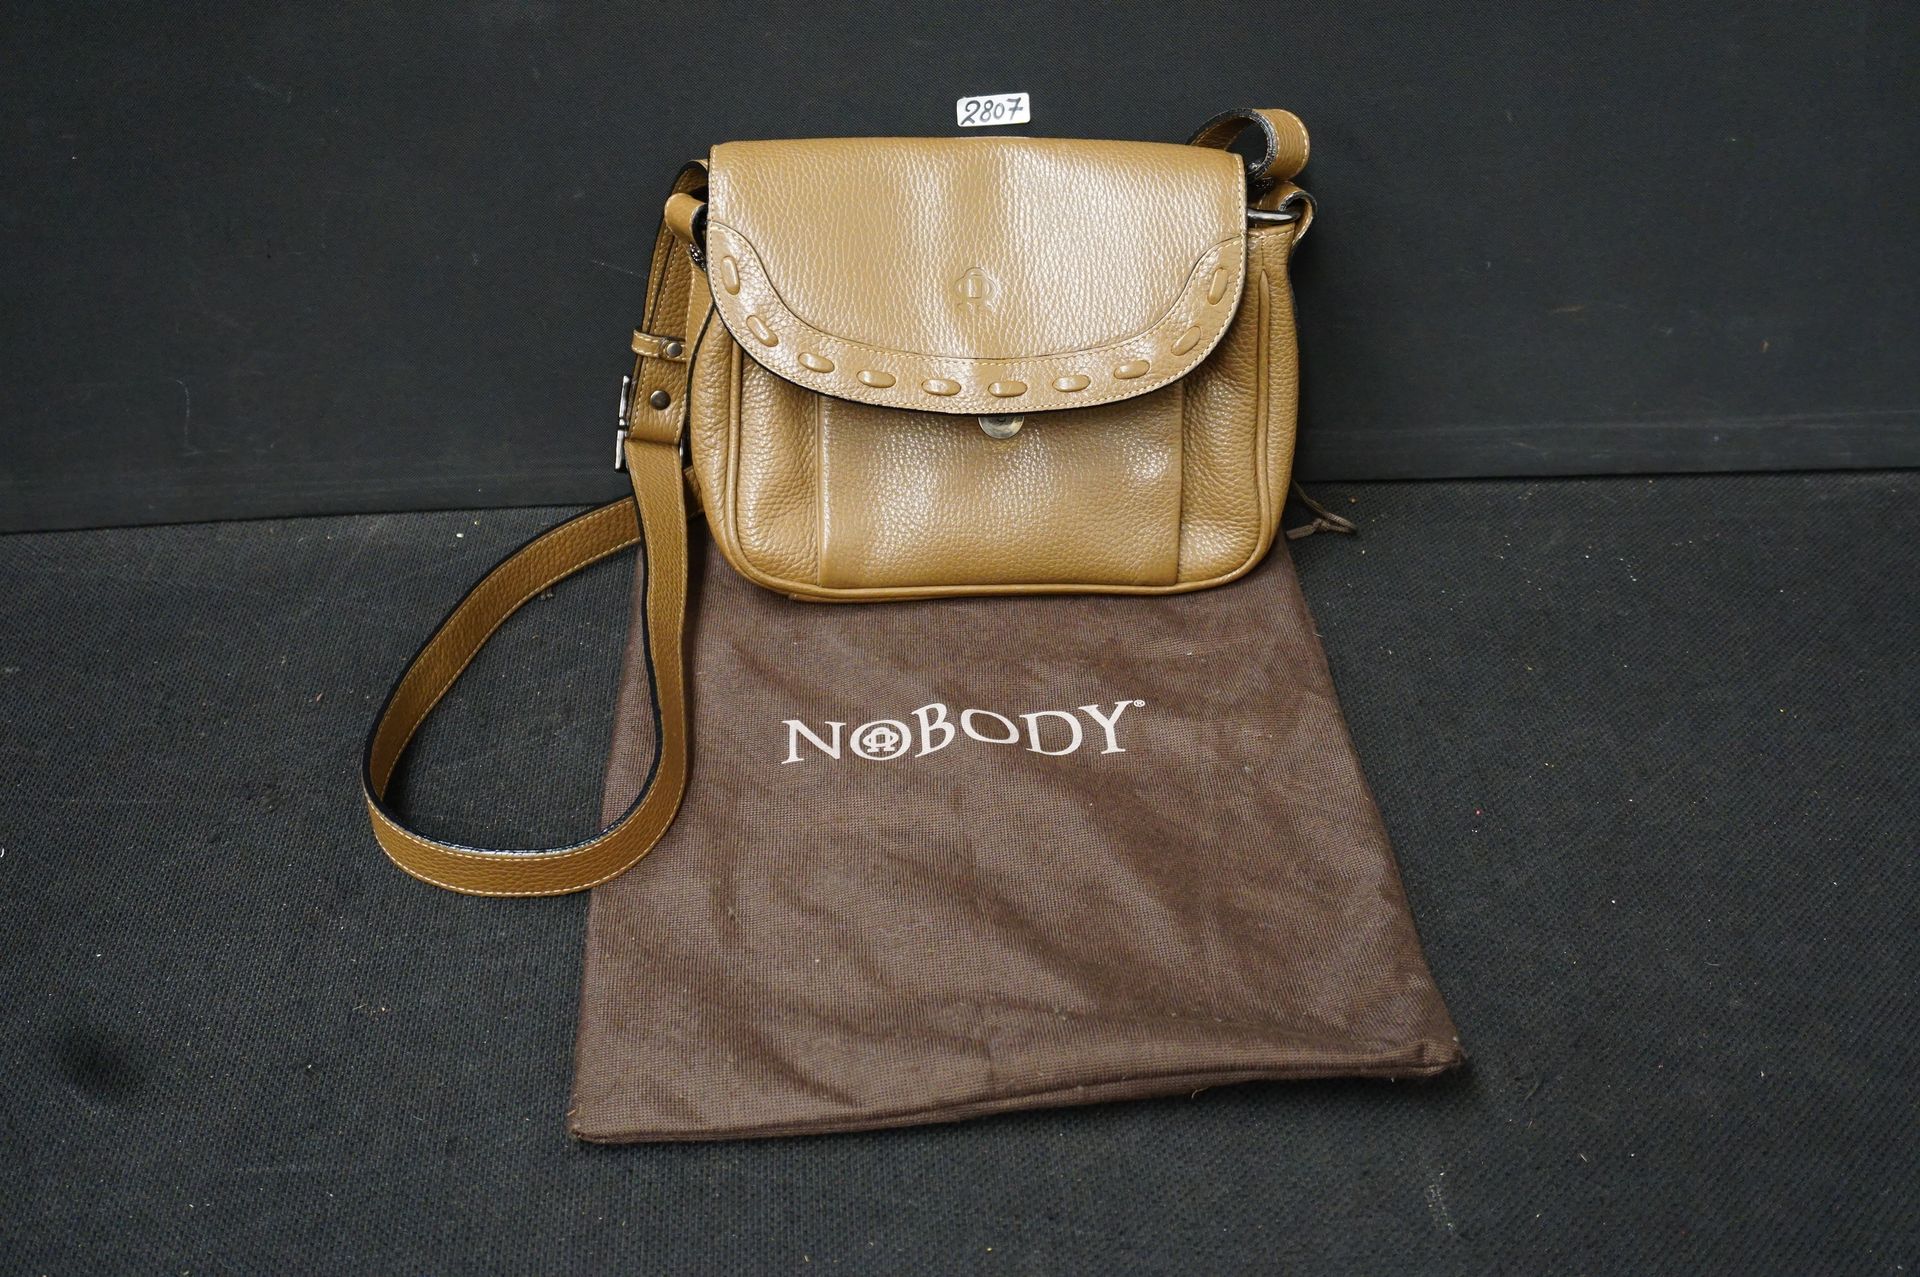 NOBODY Original leather handbag